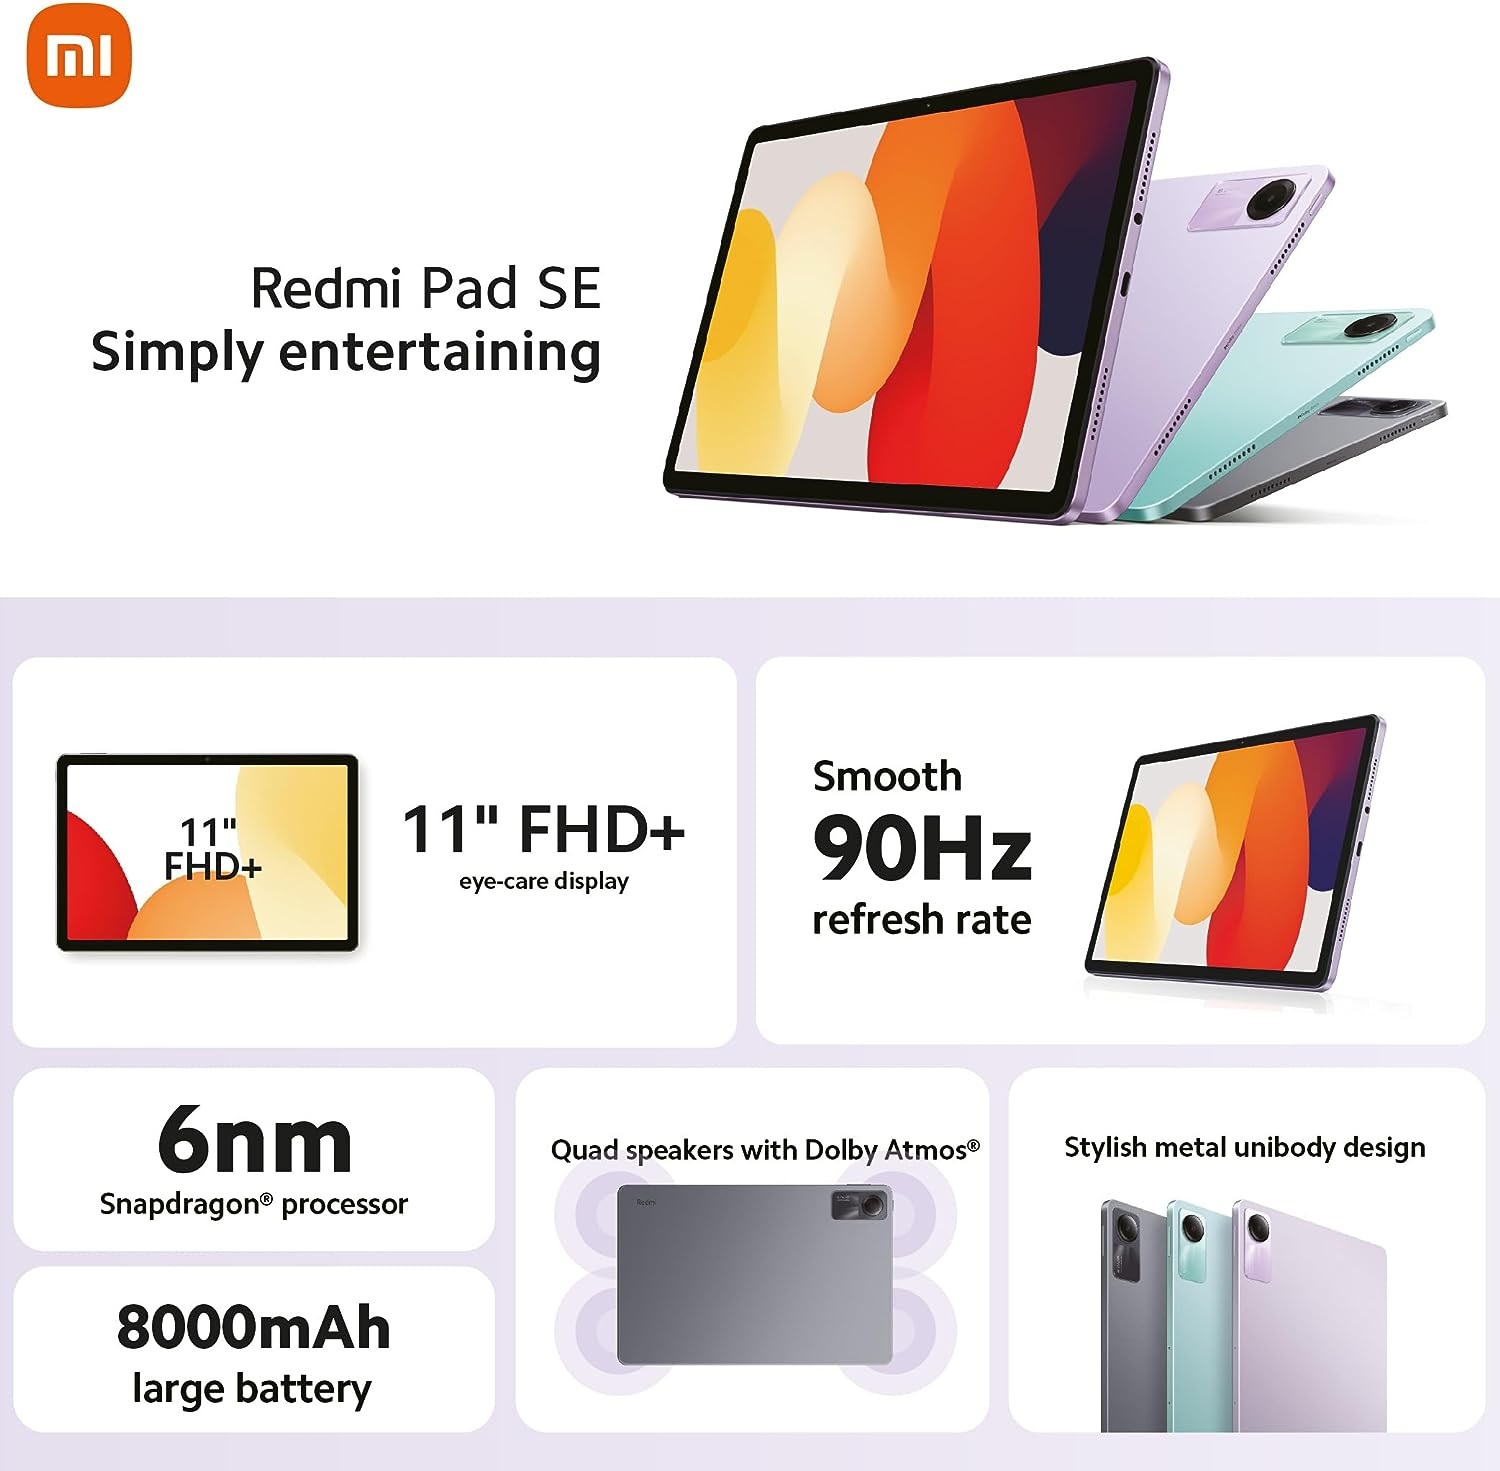 Xiaomi Redmi Pad SE 8GB + 256GB – Original Malaysia Set